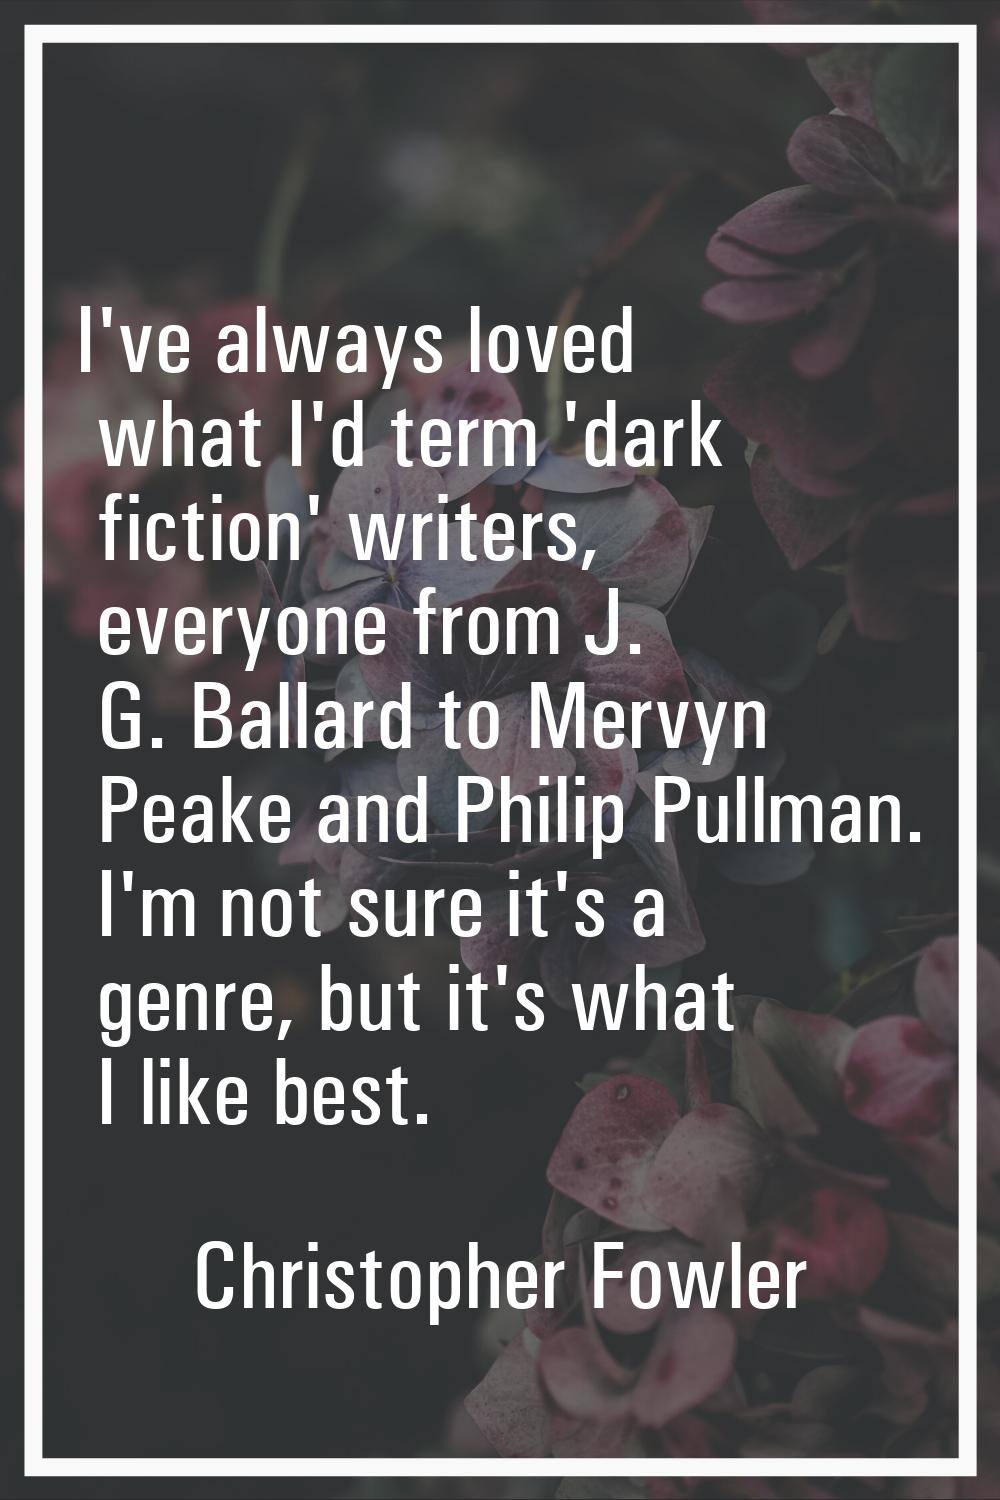 I've always loved what I'd term 'dark fiction' writers, everyone from J. G. Ballard to Mervyn Peake